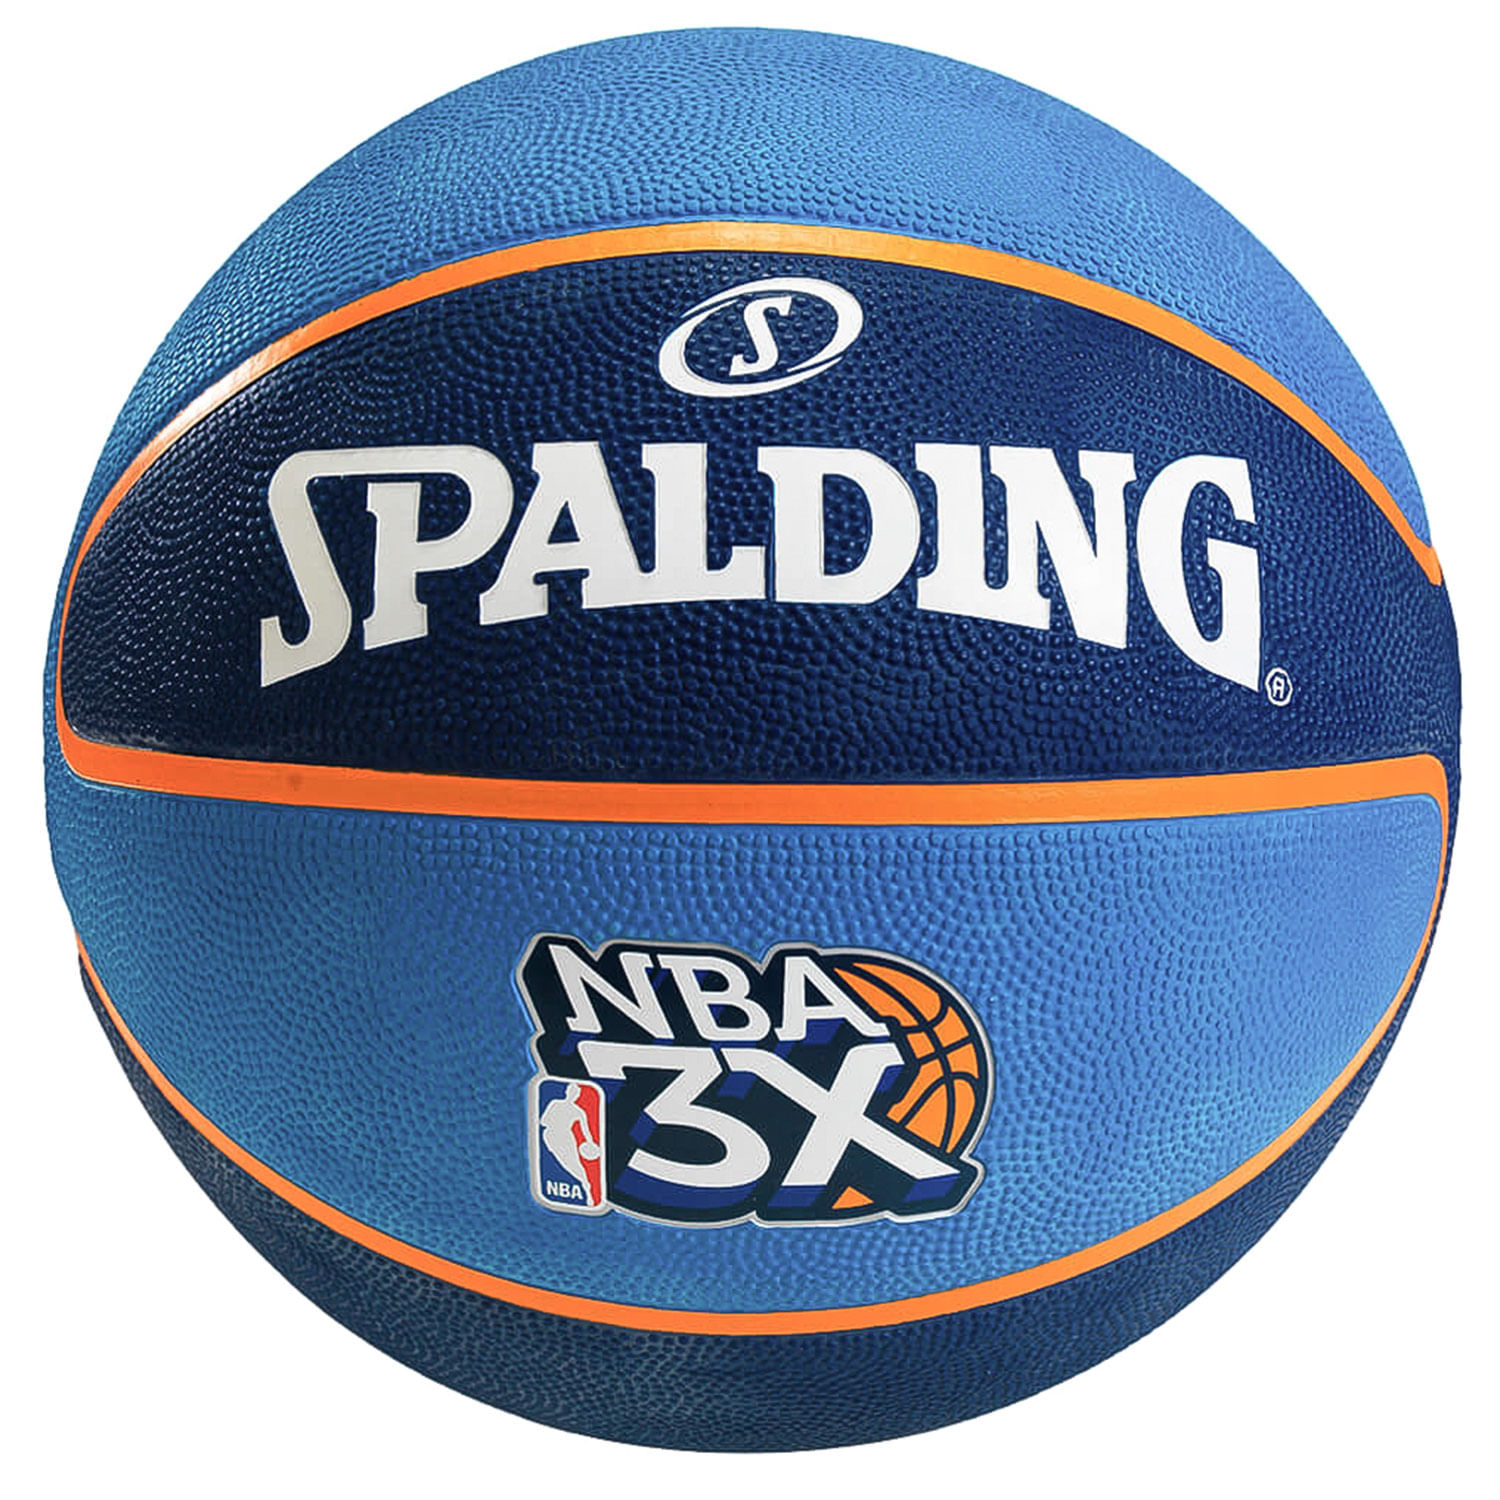 Wilson - Pelota de Basquet - NBA Authentic Indoor Comp Basketball - Promart